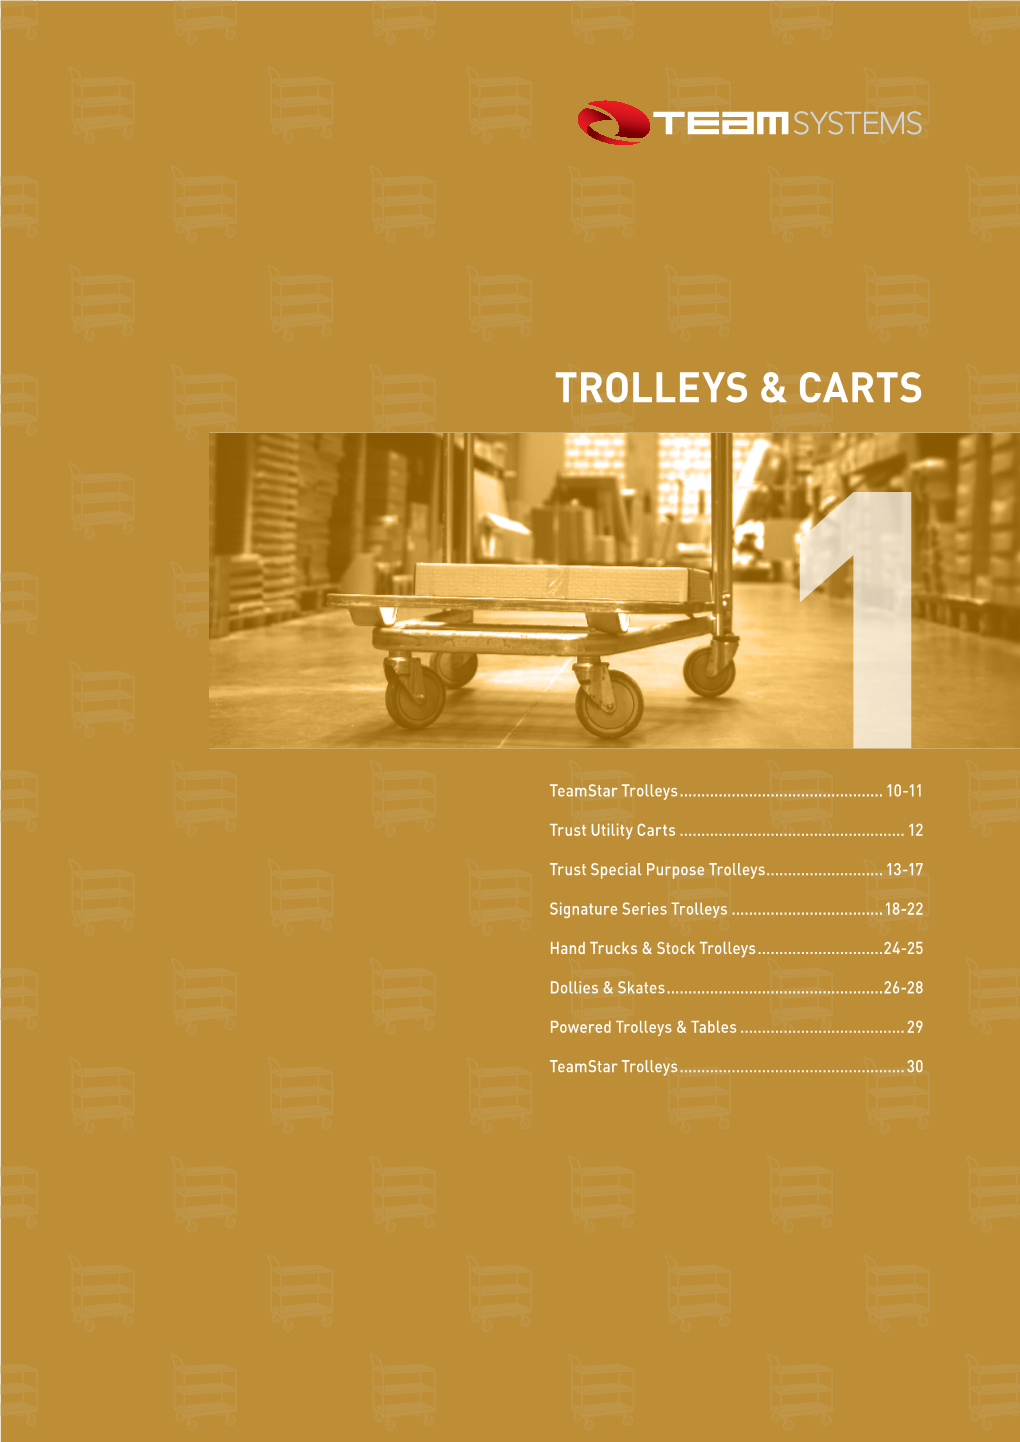 Trolleys & Carts